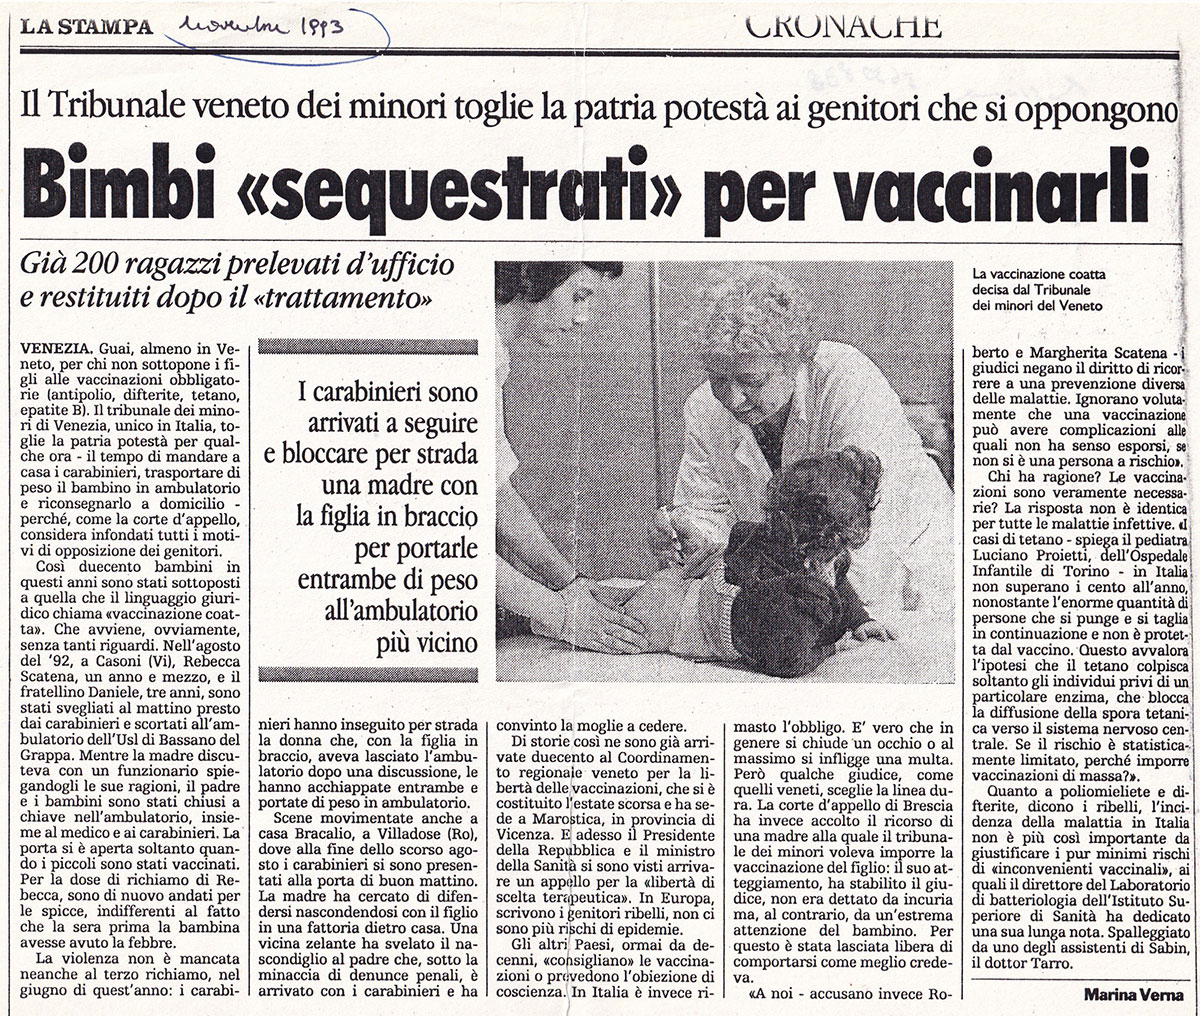 Children "seized" to be vaccinated. La Stampa, November 1993